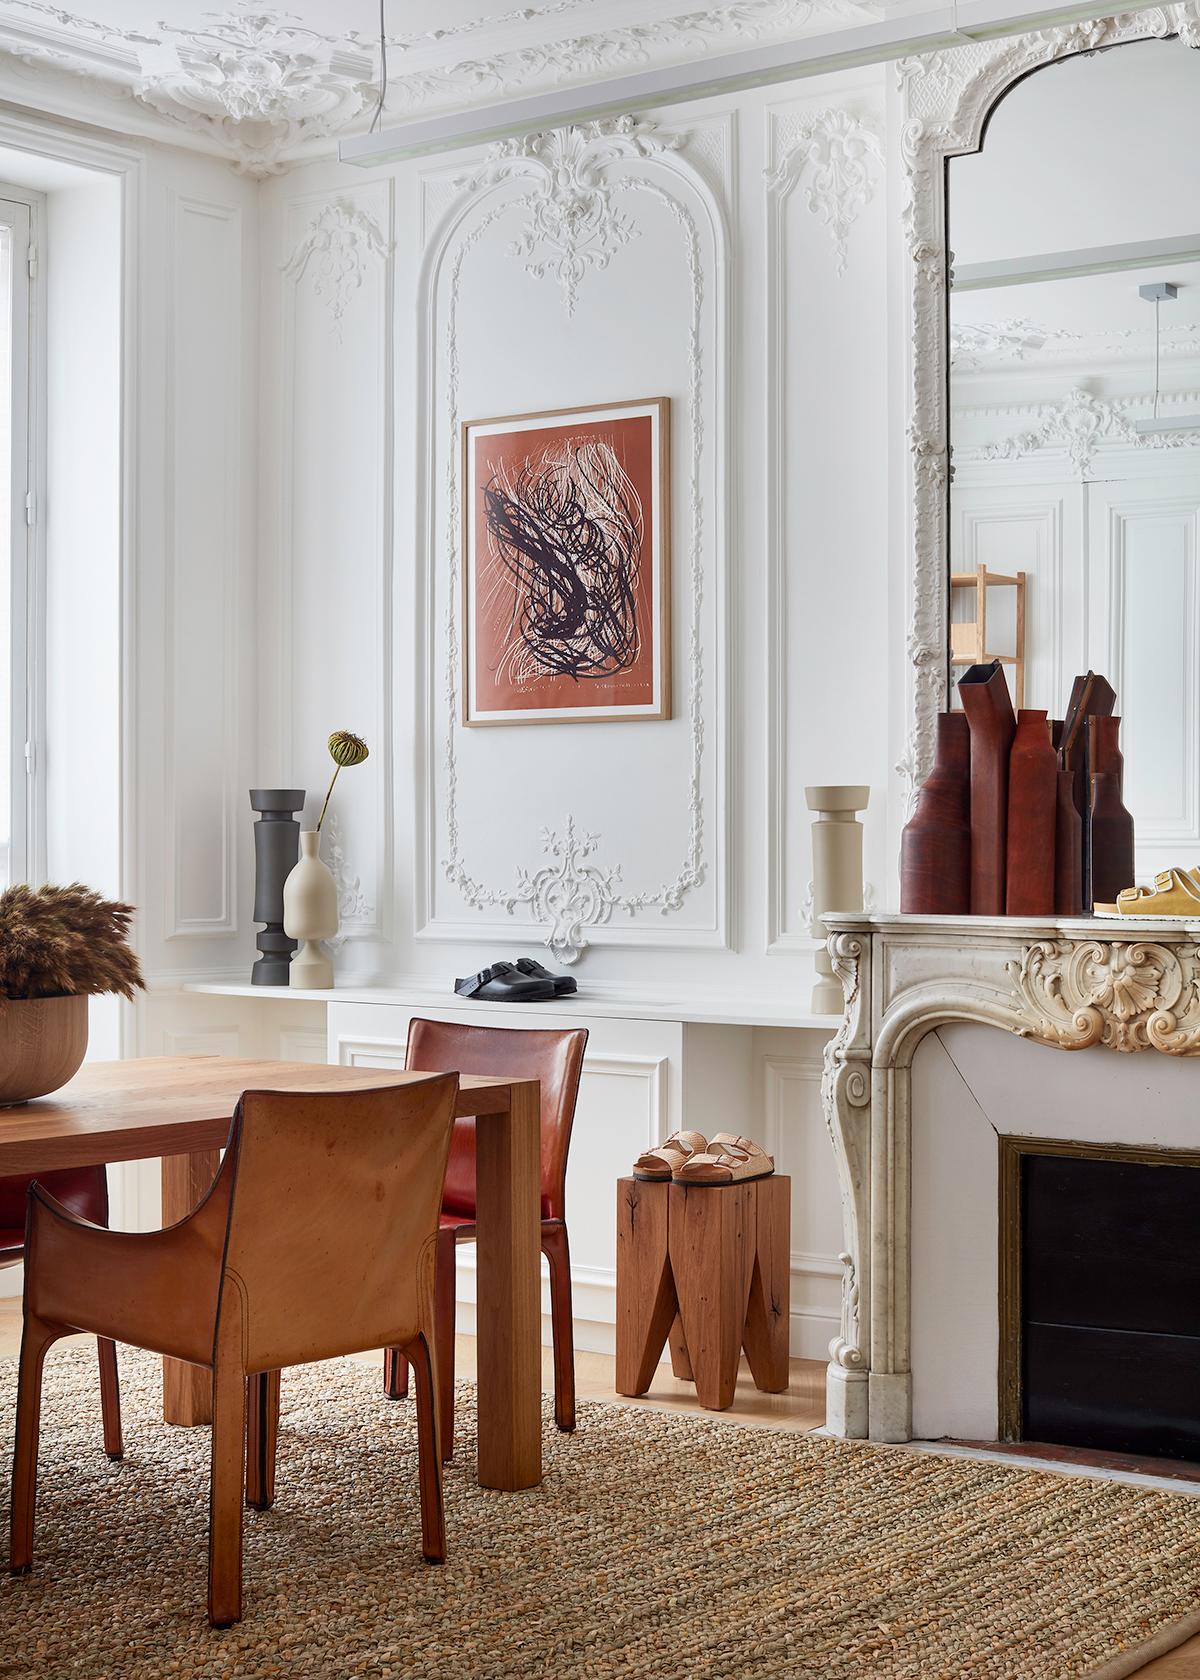 Birkenstock’s New Showroom is Set in a Parisian Apartment